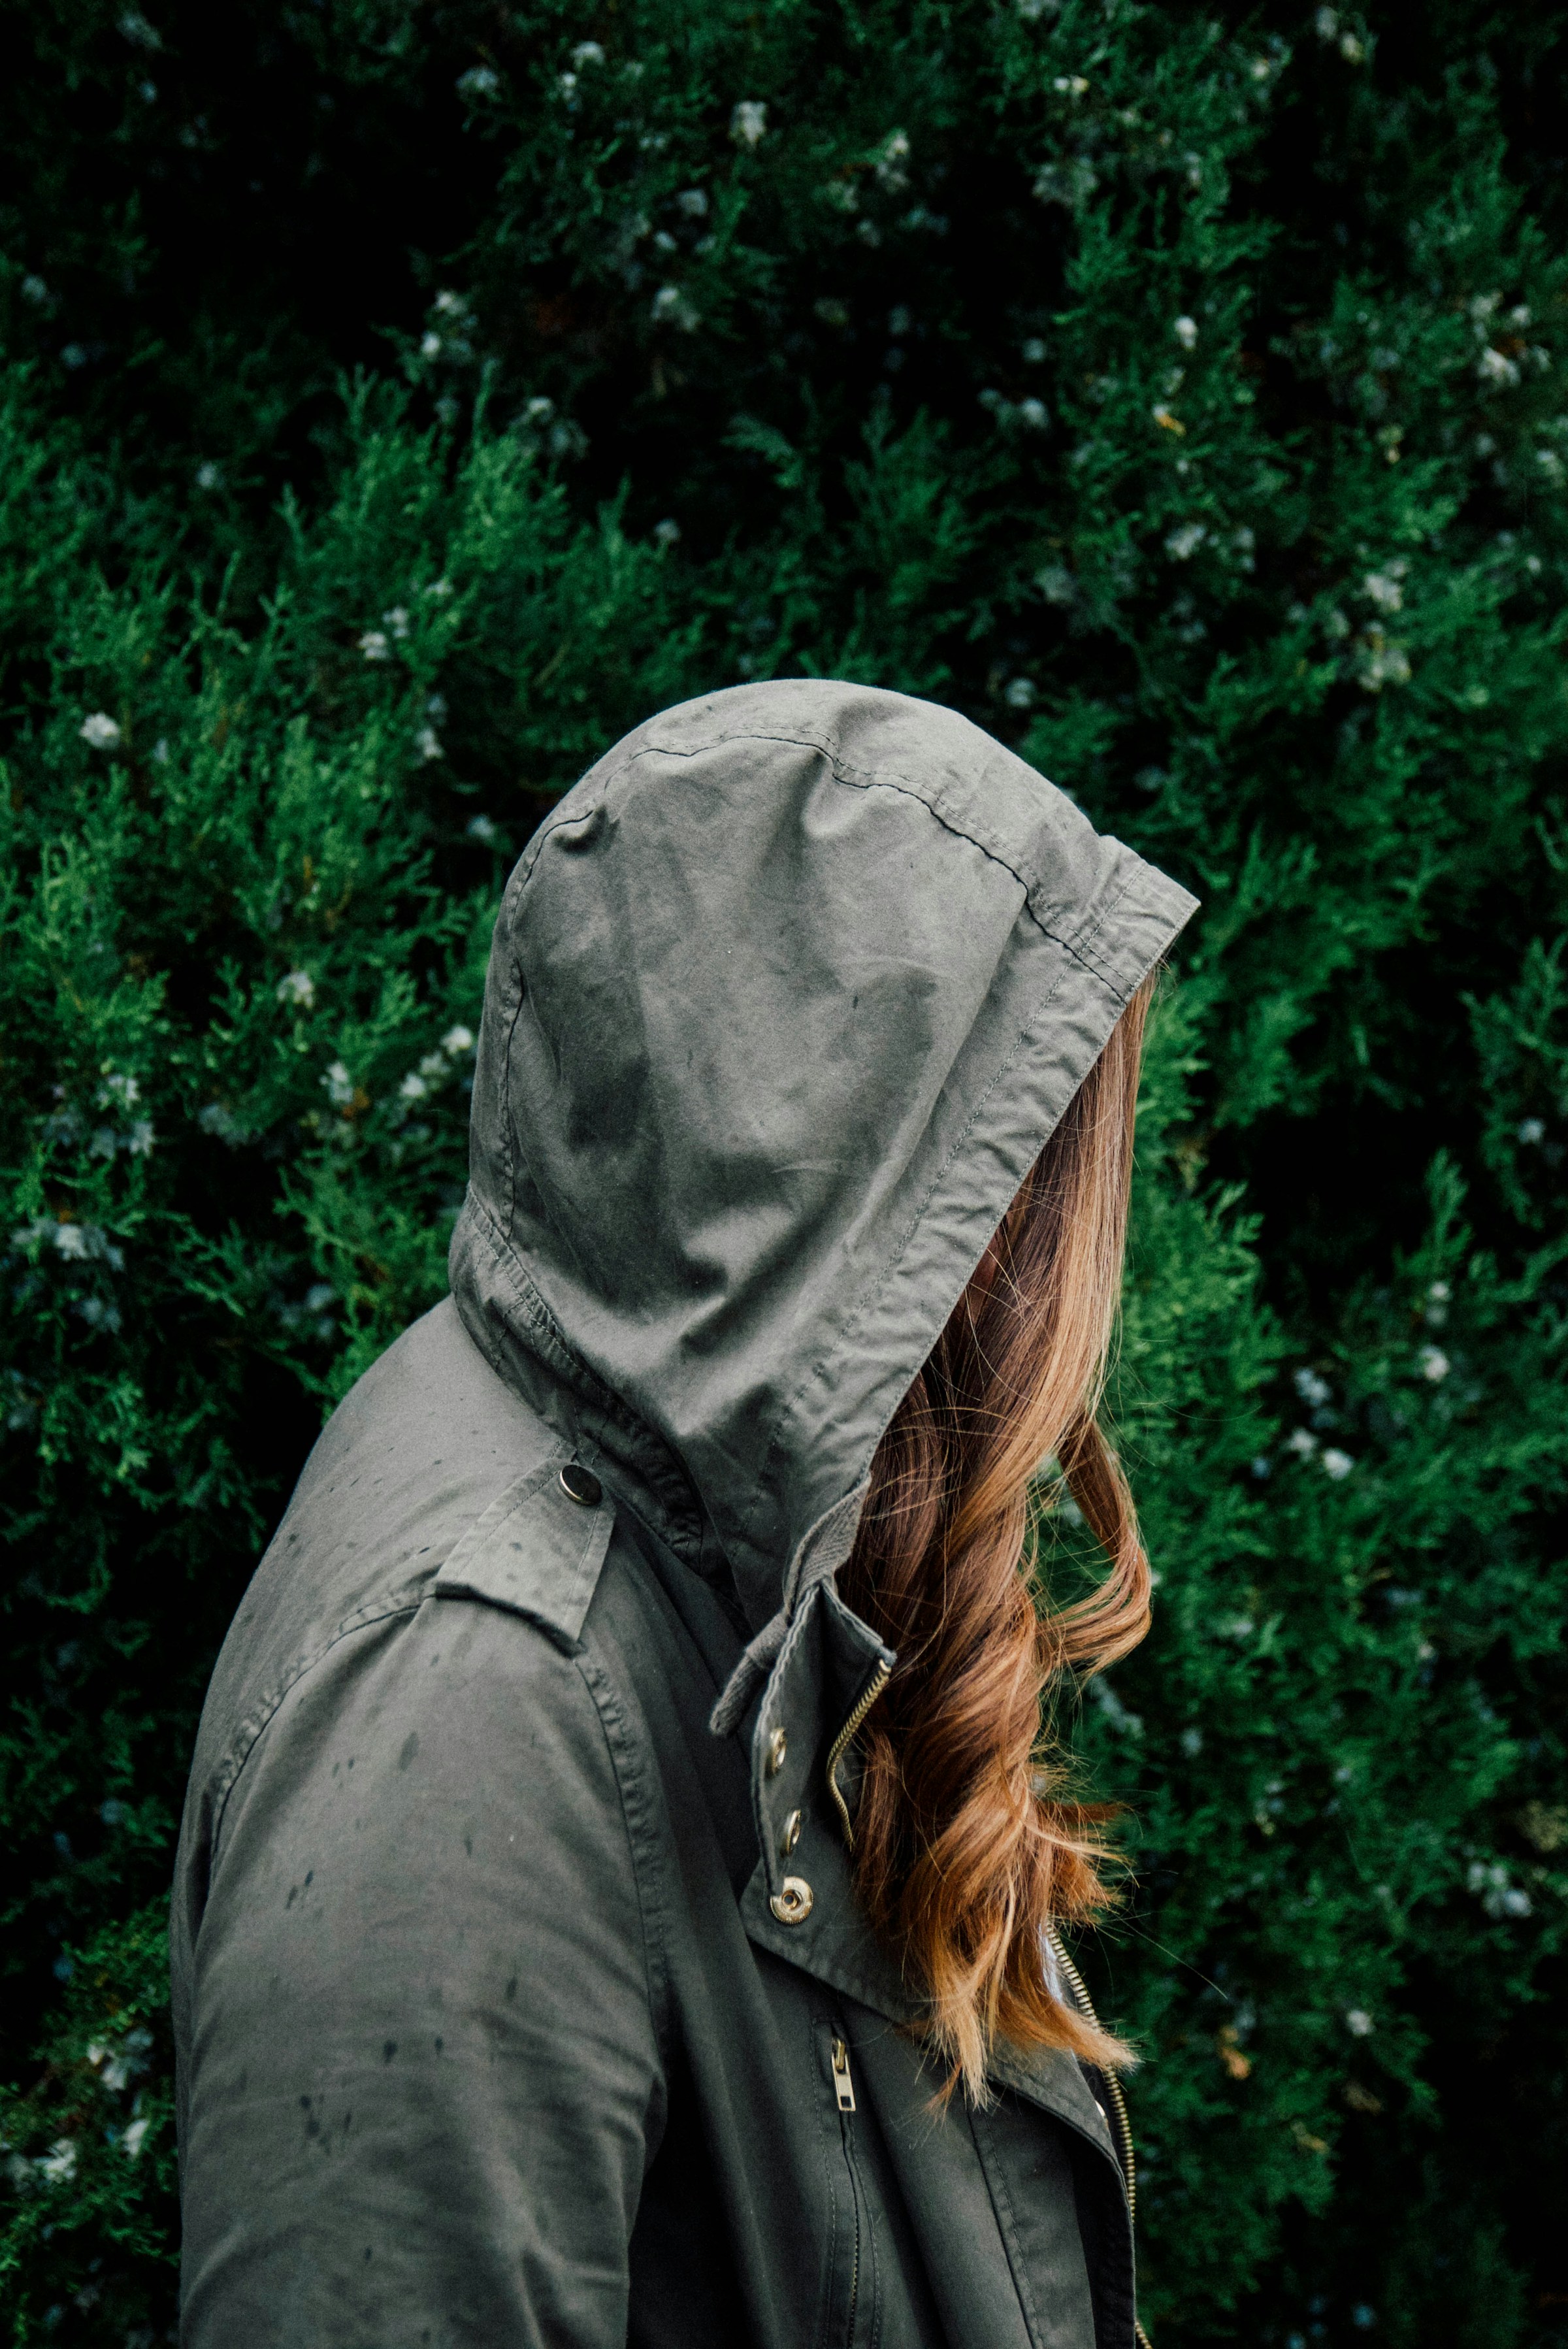 A woman wearing a gray jacket | Source: Unsplash